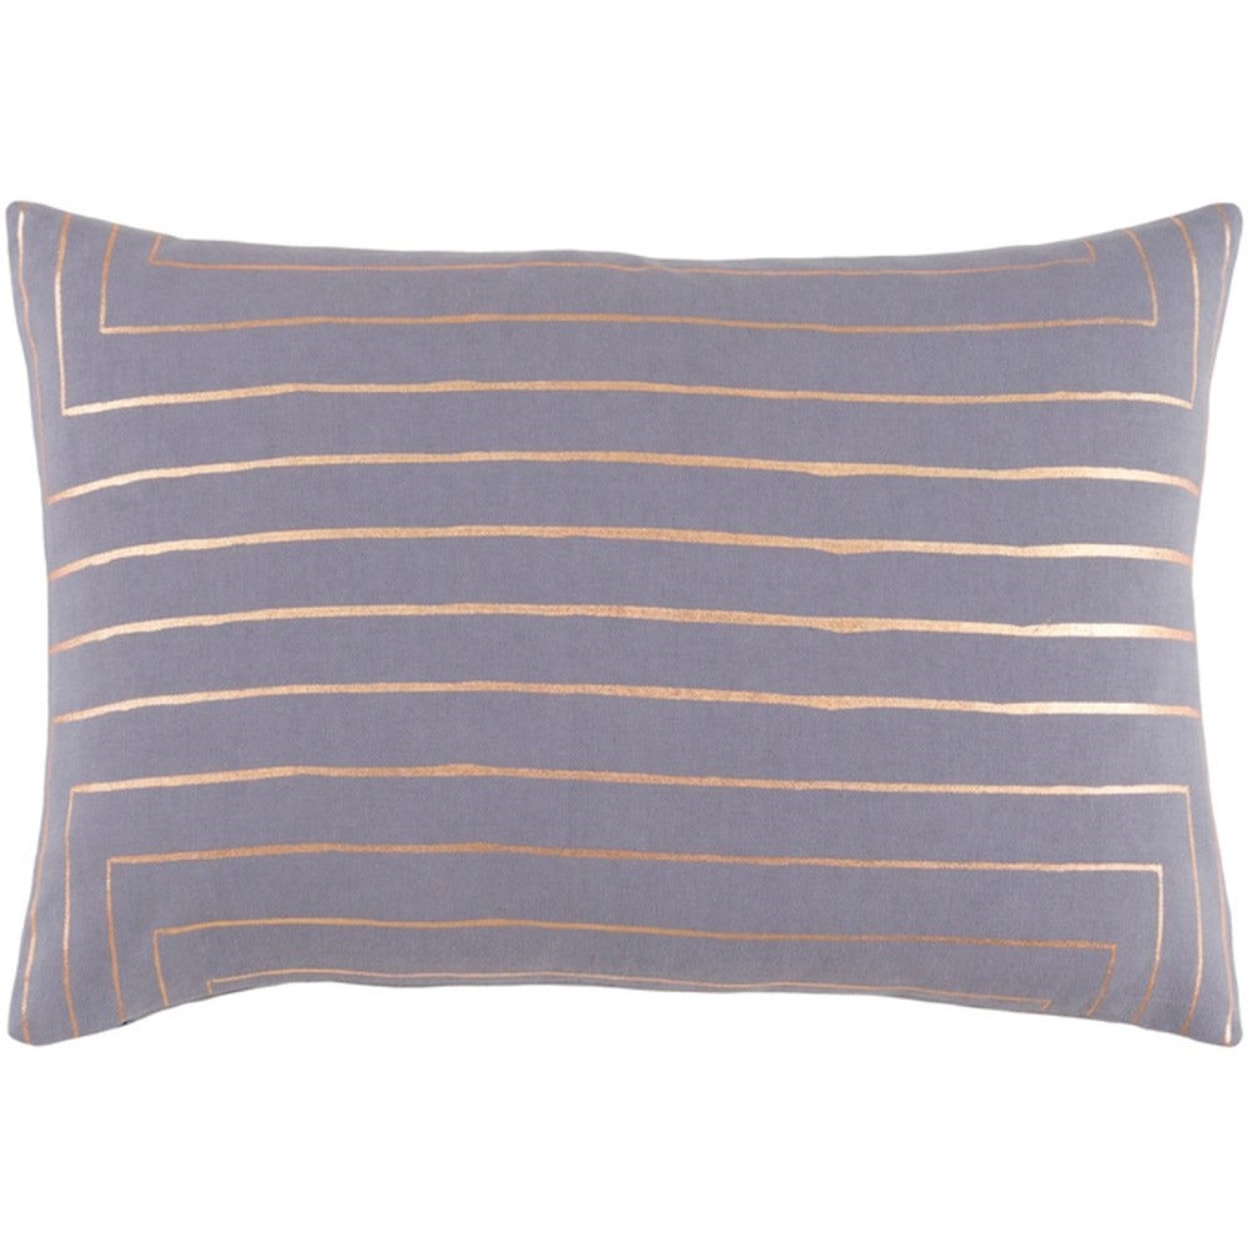 Surya Crescent Pillow